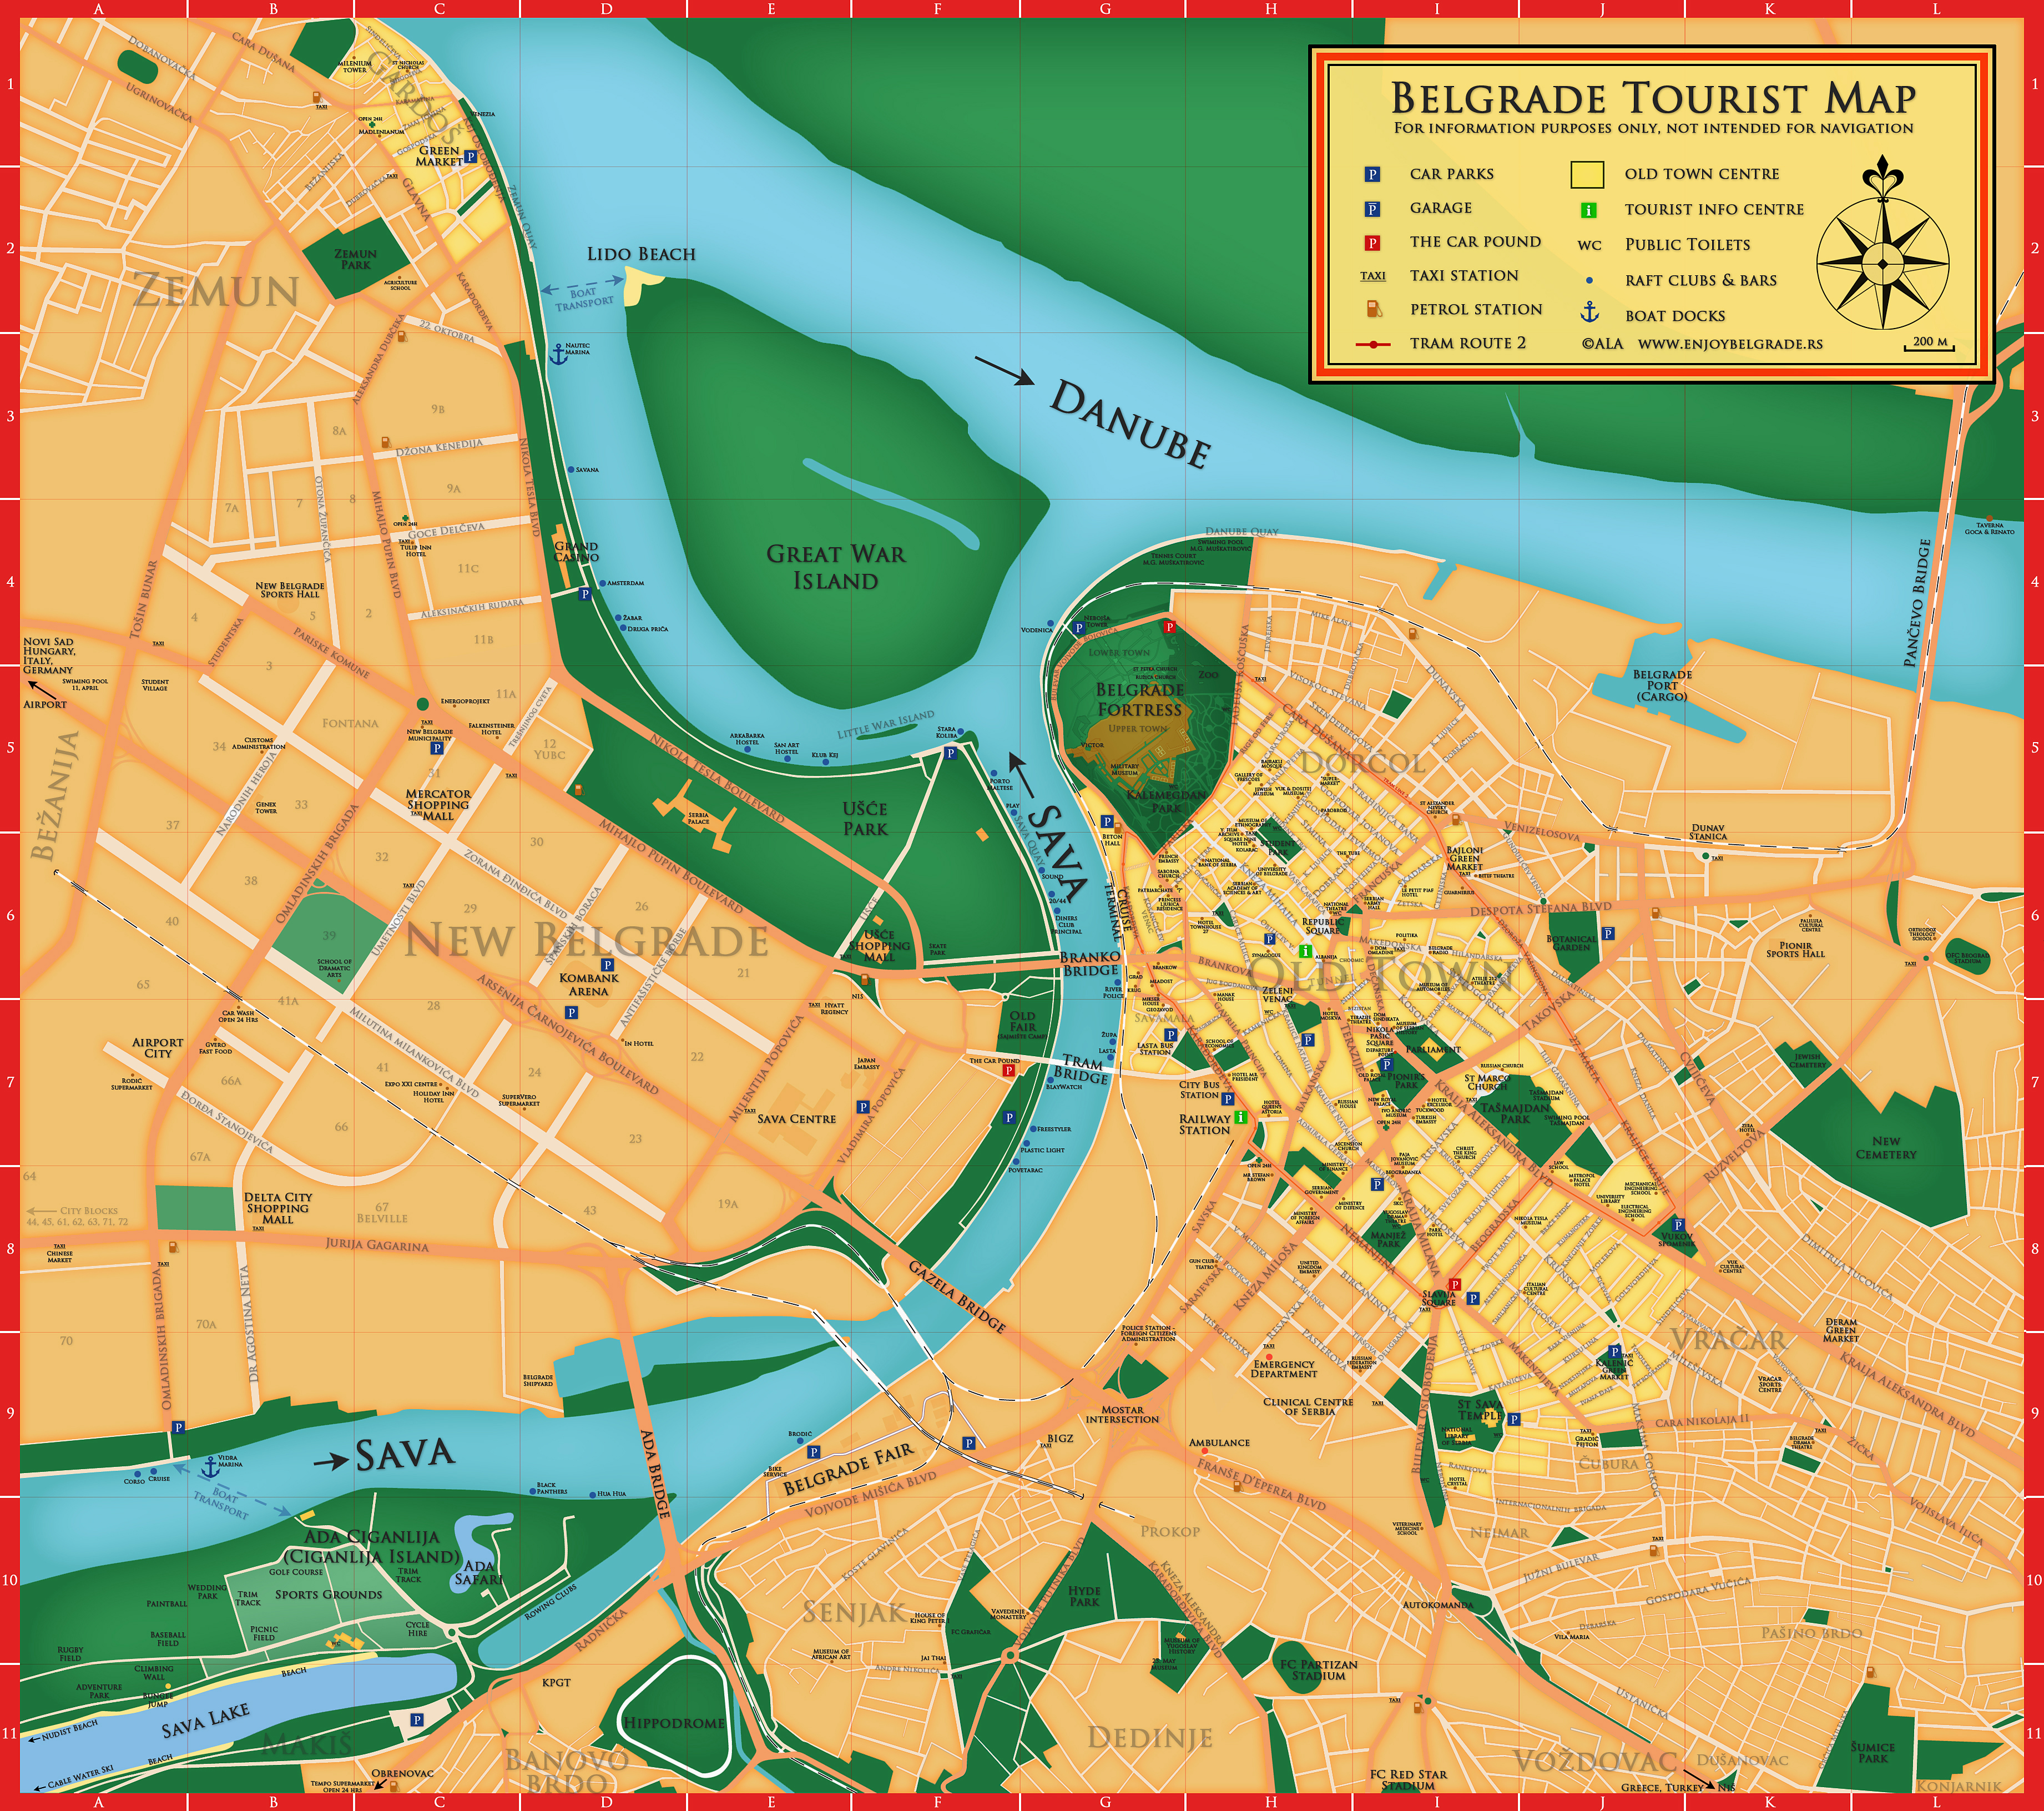 cara dusana beograd mapa Belgrade Traffic, Parking, Cycling and Taxi cara dusana beograd mapa